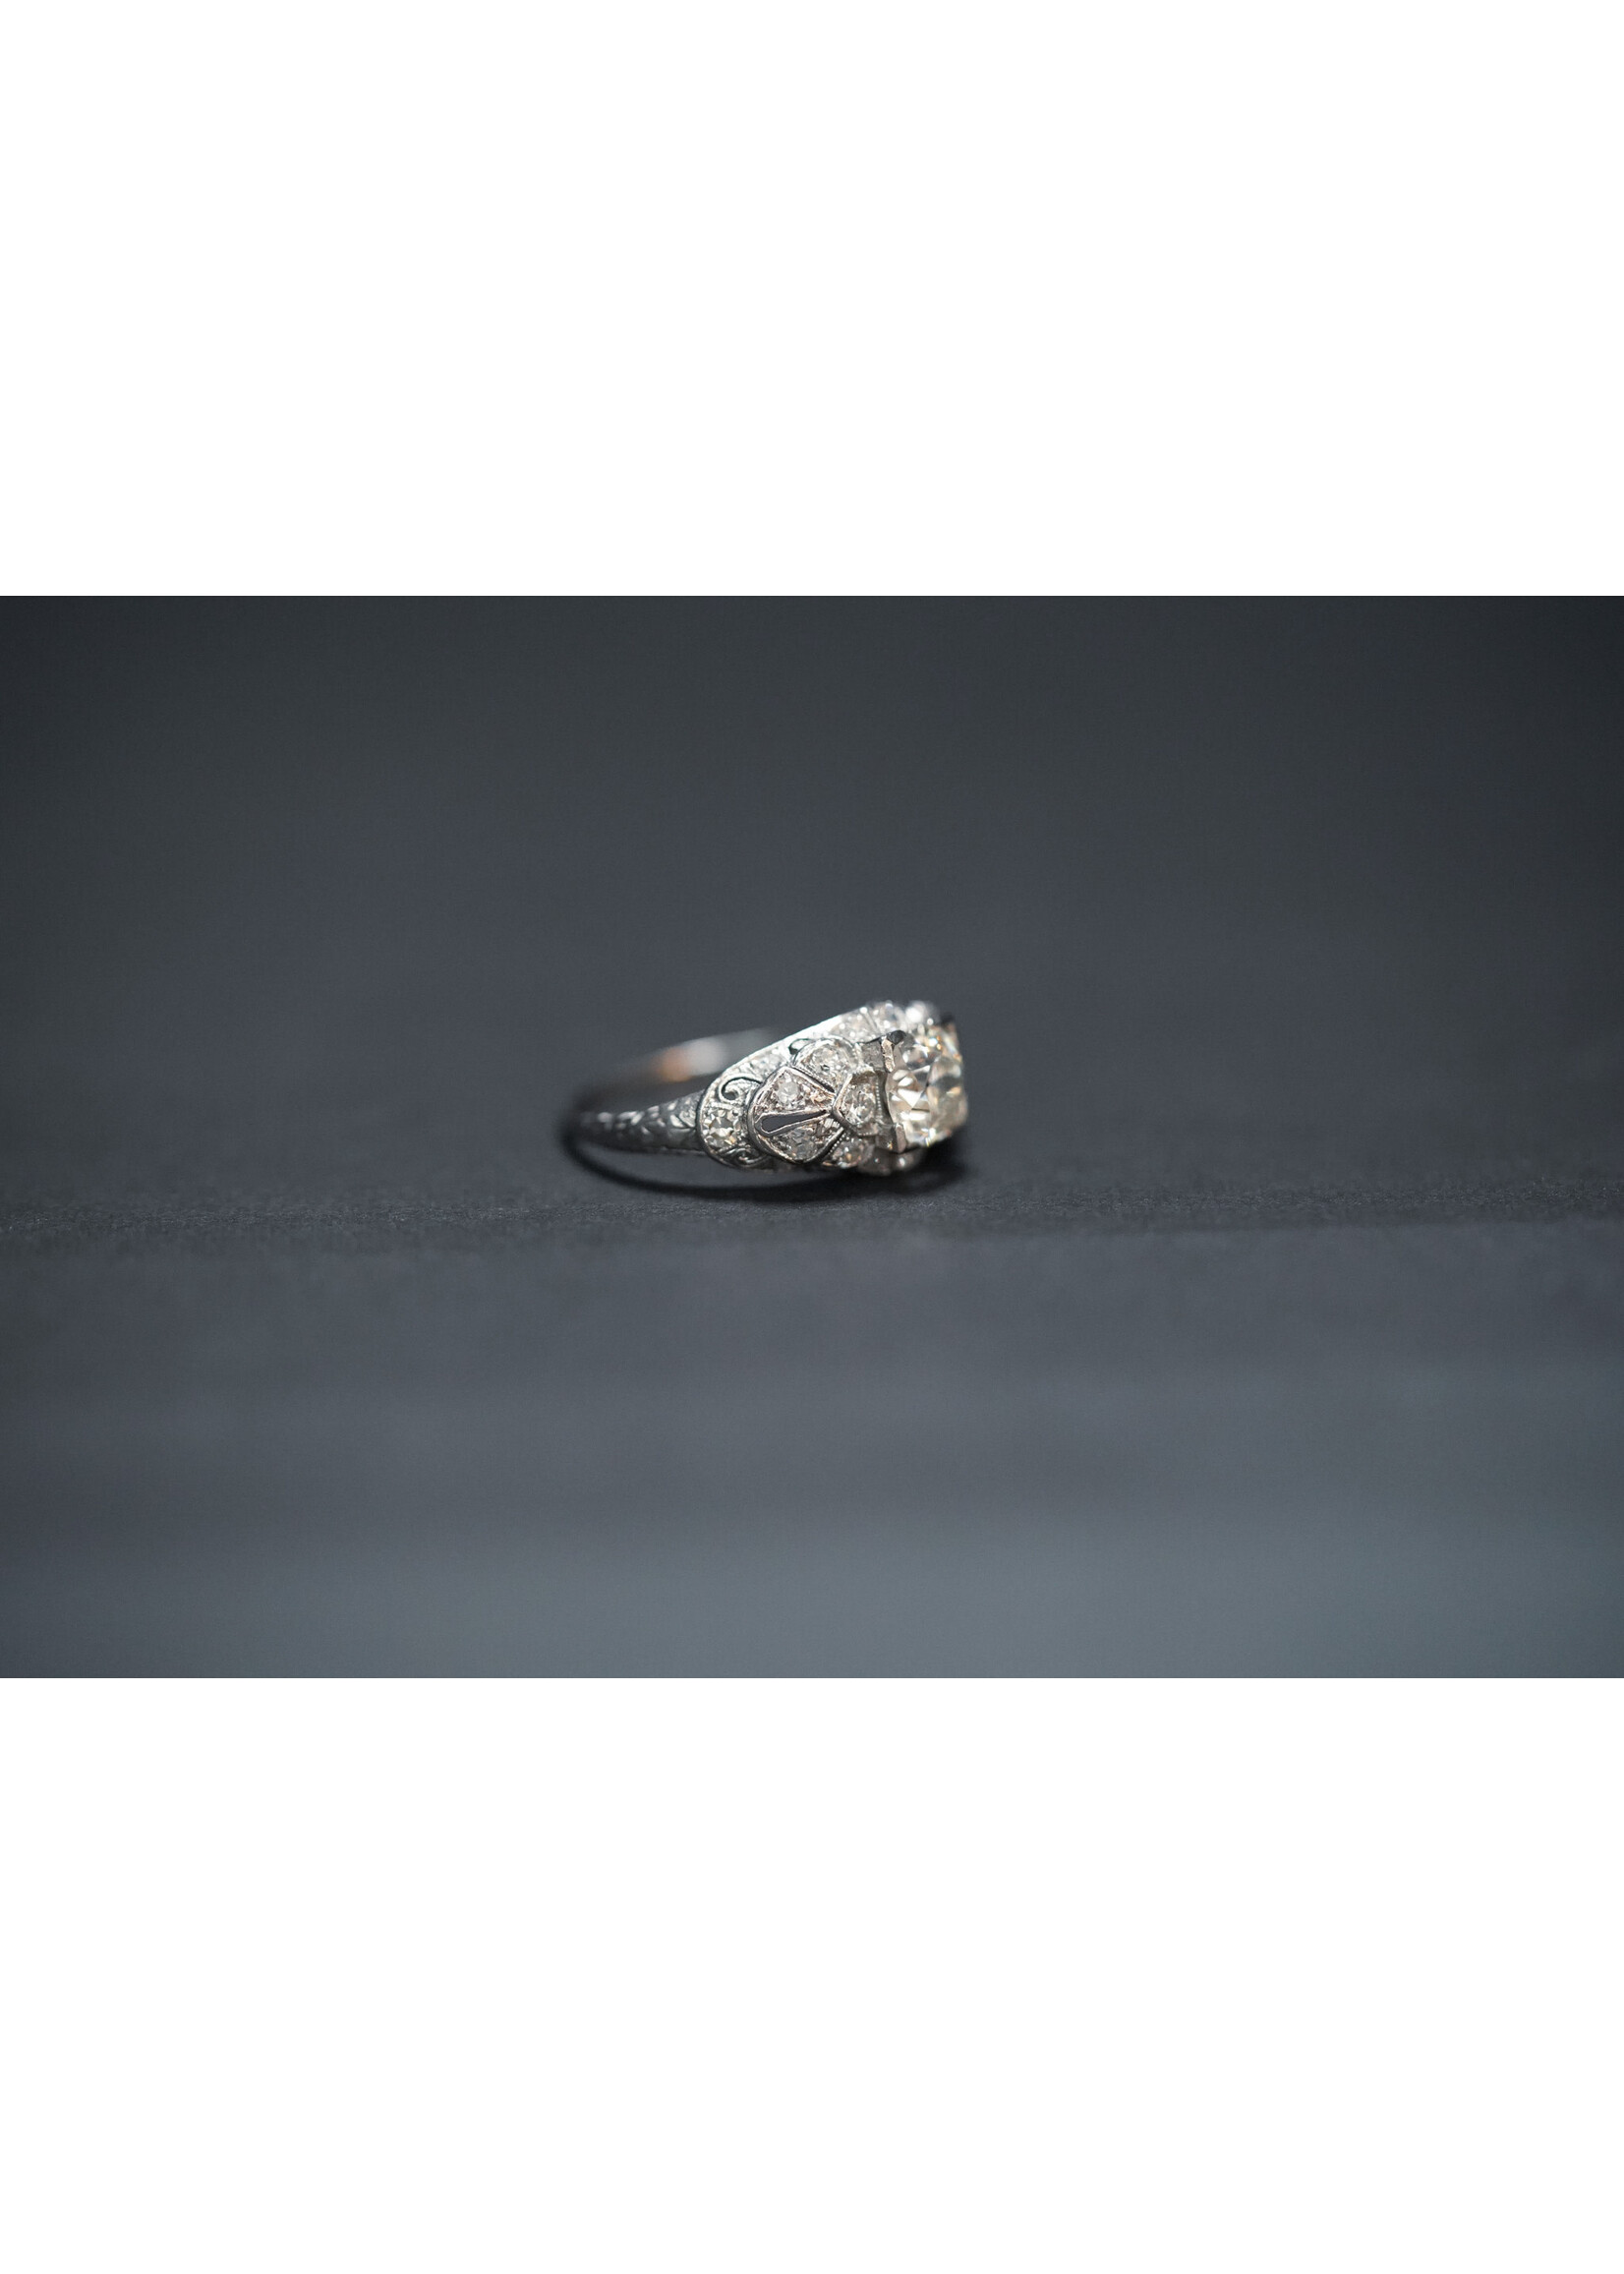 18KW 3.60g 1.30ctw (.97ctr) K/VS2 European Cut Diamond Vintage Ring (size 6.5)